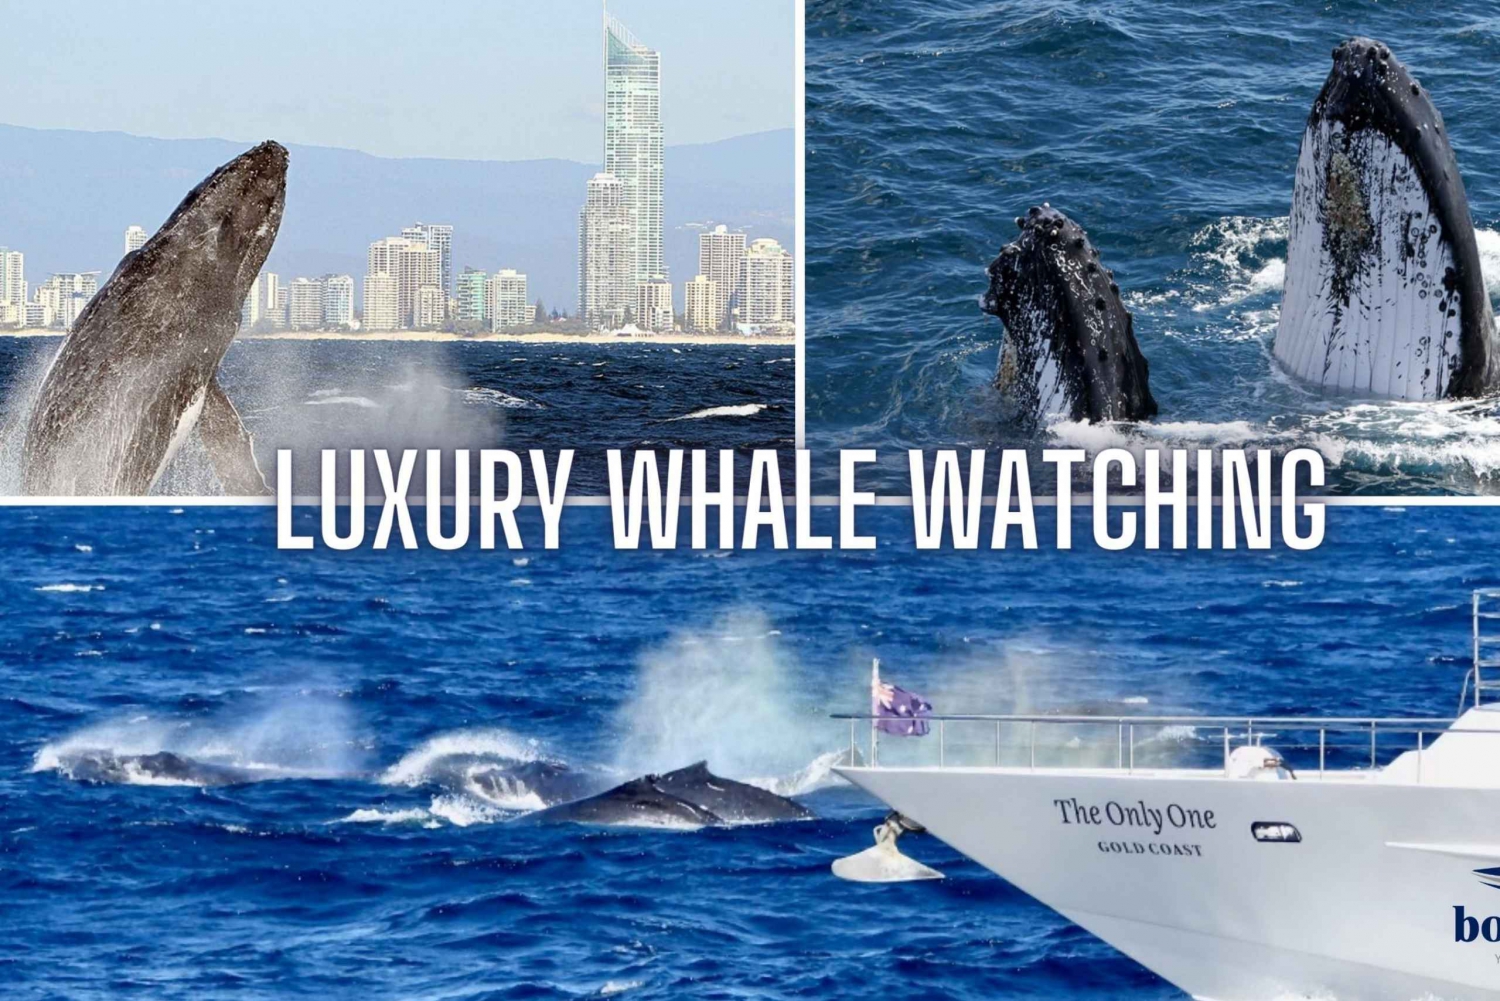 Gold Coast: rondleiding walvissen spotten